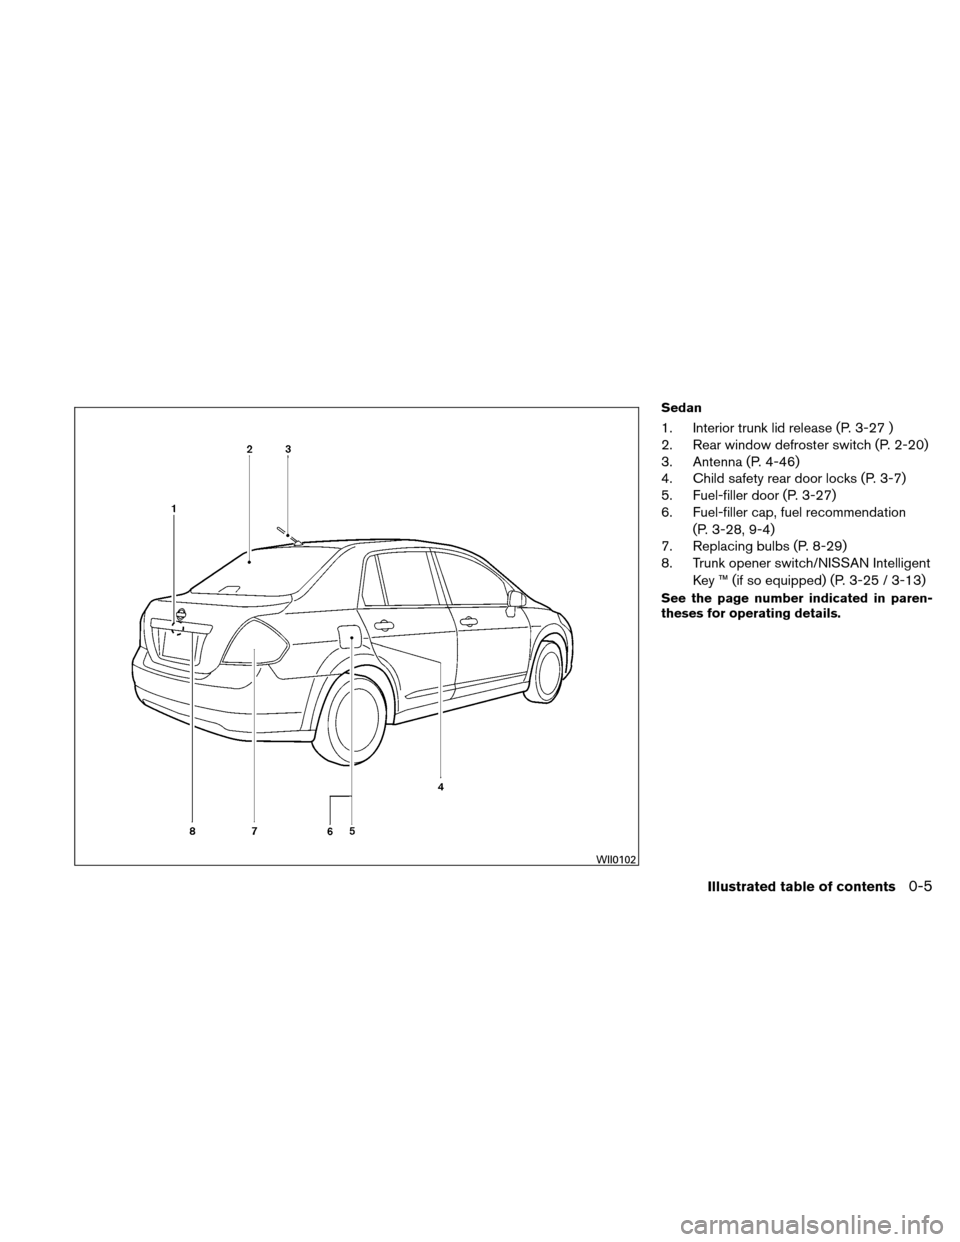 NISSAN VERSA HATCHBACK 2010 1.G Owners Manual Sedan
1. Interior trunk lid release (P. 3-27 )
2. Rear window defroster switch (P. 2-20)
3. Antenna (P. 4-46)
4. Child safety rear door locks (P. 3-7)
5. Fuel-filler door (P. 3-27)
6. Fuel-filler cap,